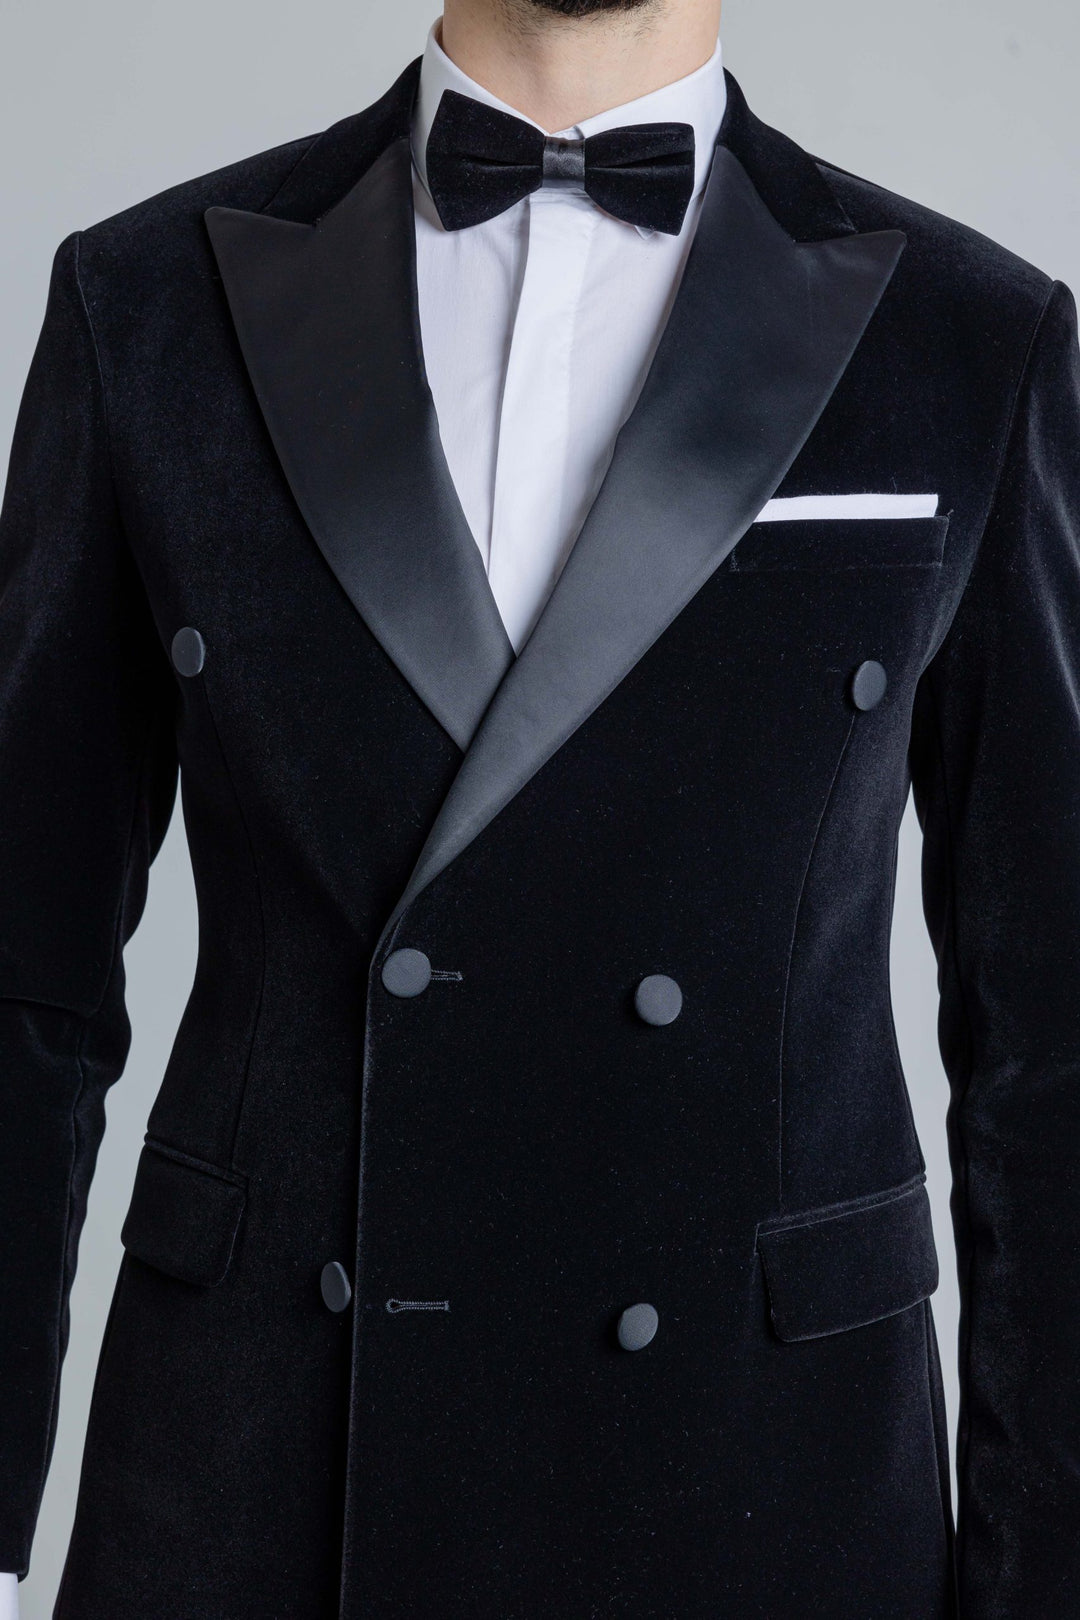 Black velor tuxedo with double breasted jacket